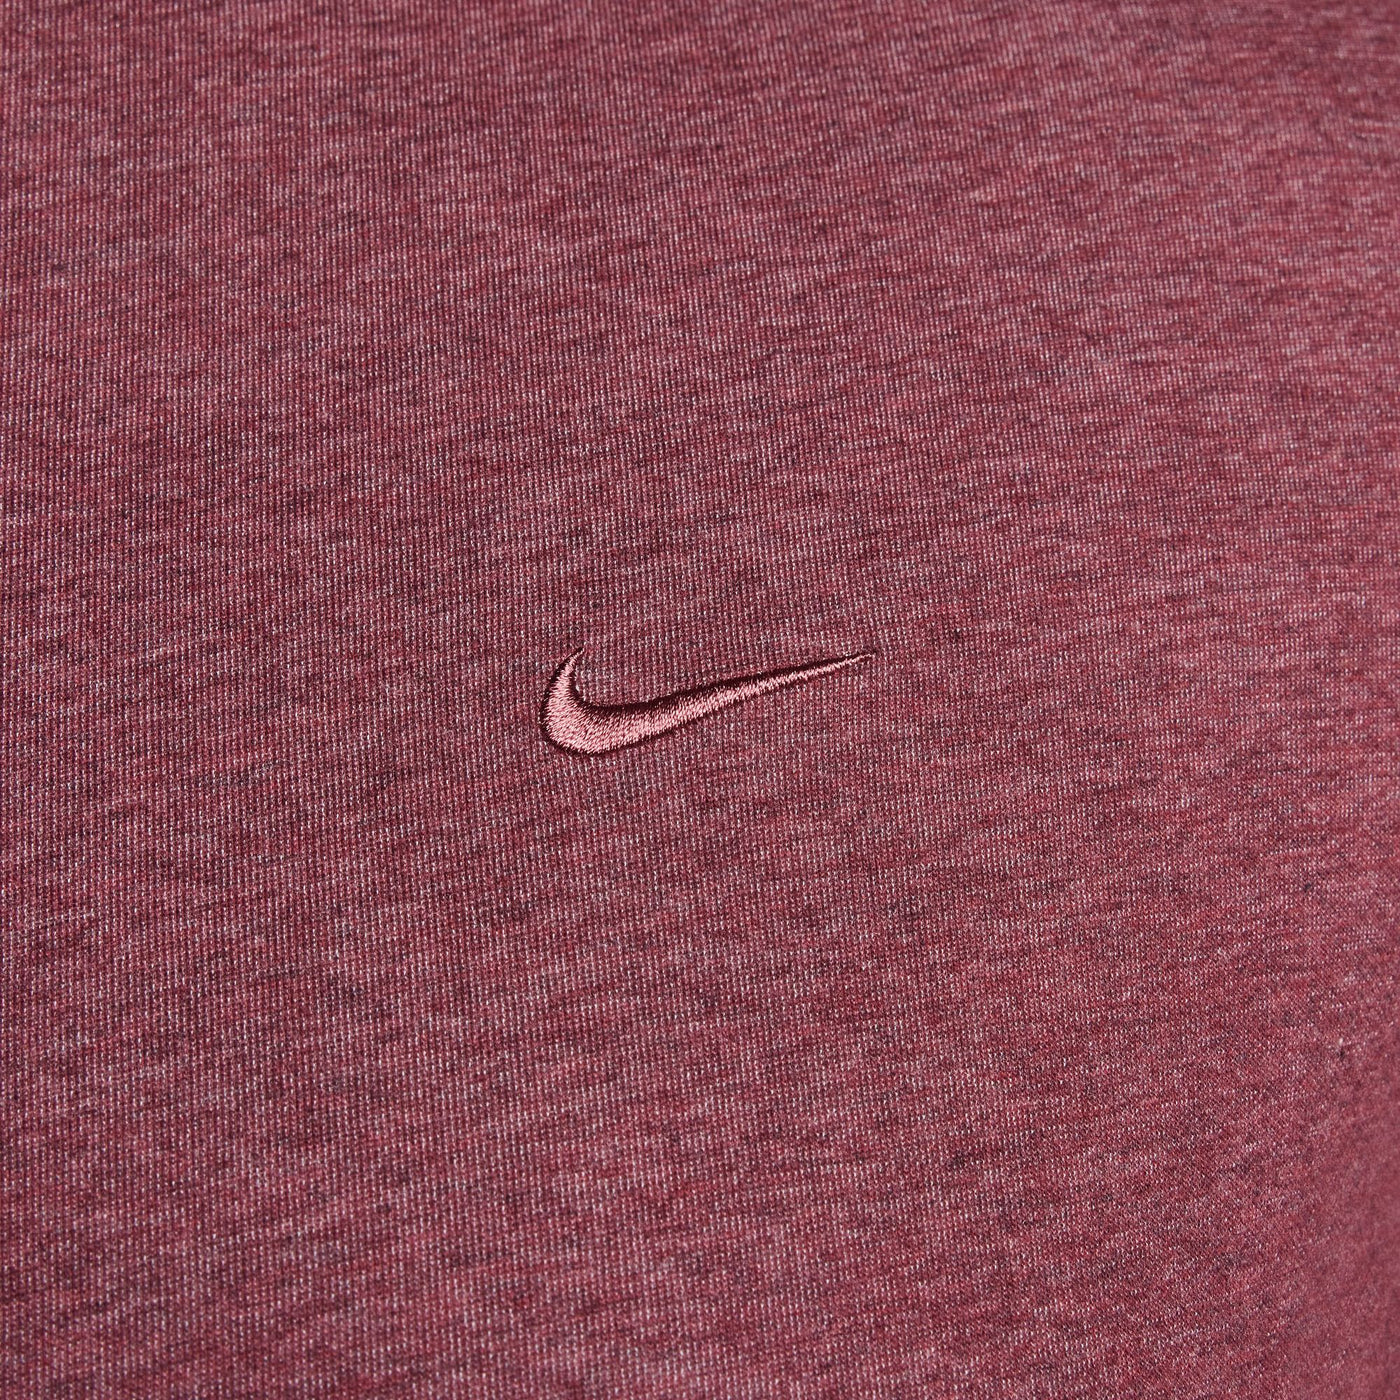 Men's Nike Primary Long Sleeve - FB8585-681